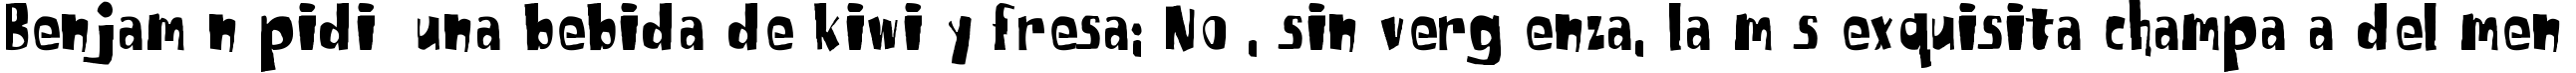 Пример написания шрифтом SpongeFont SquareType текста на испанском